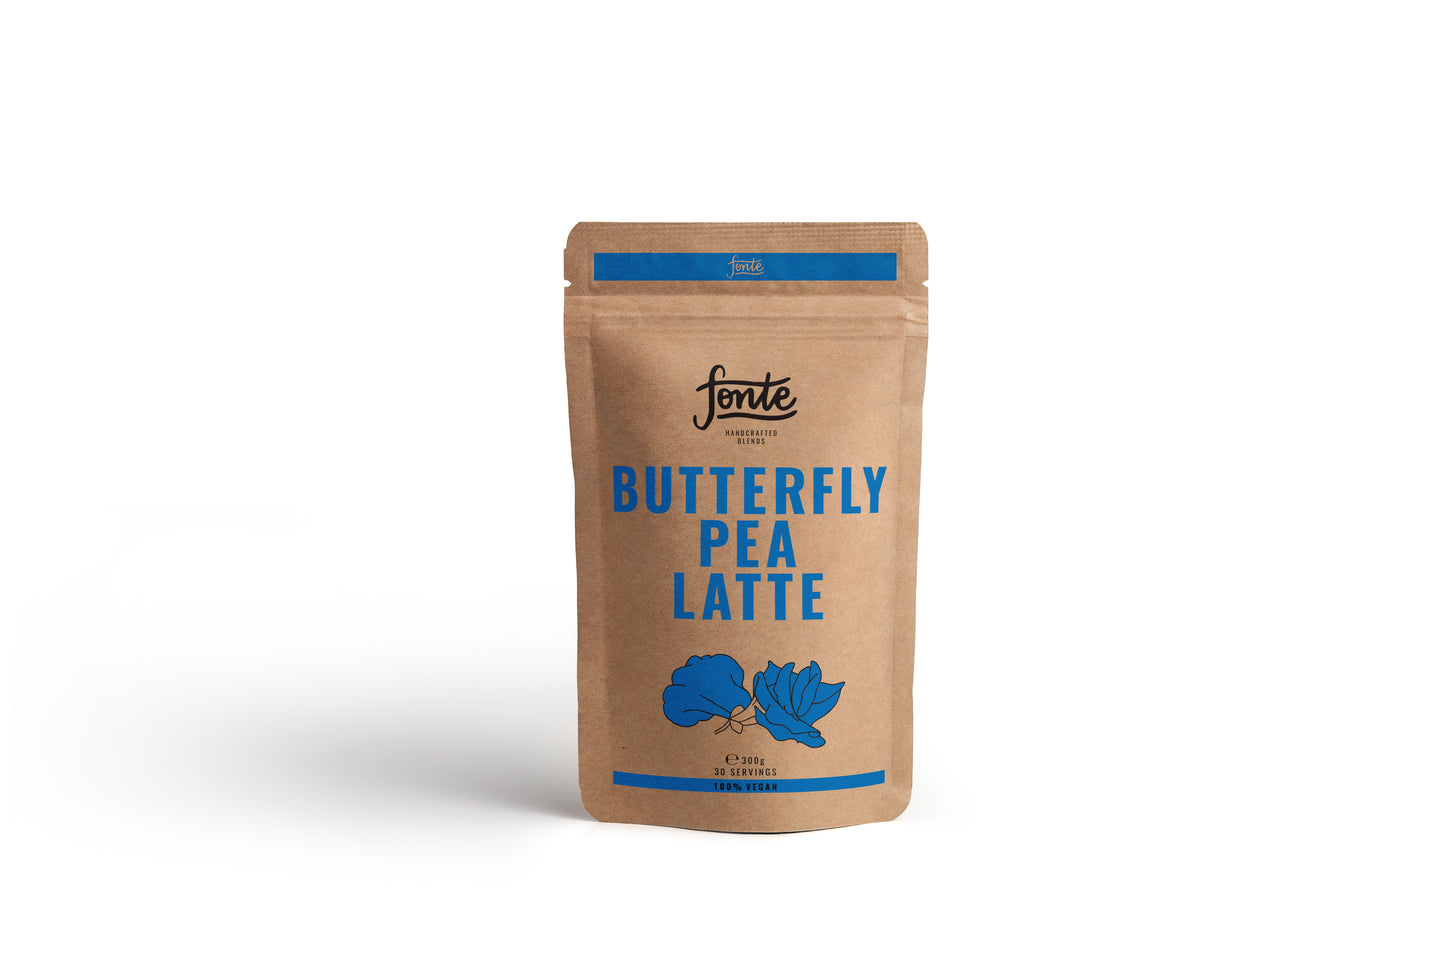 Fonte Butterfly Pea Latte 300g - 100% Vegan - PREORDER NOW